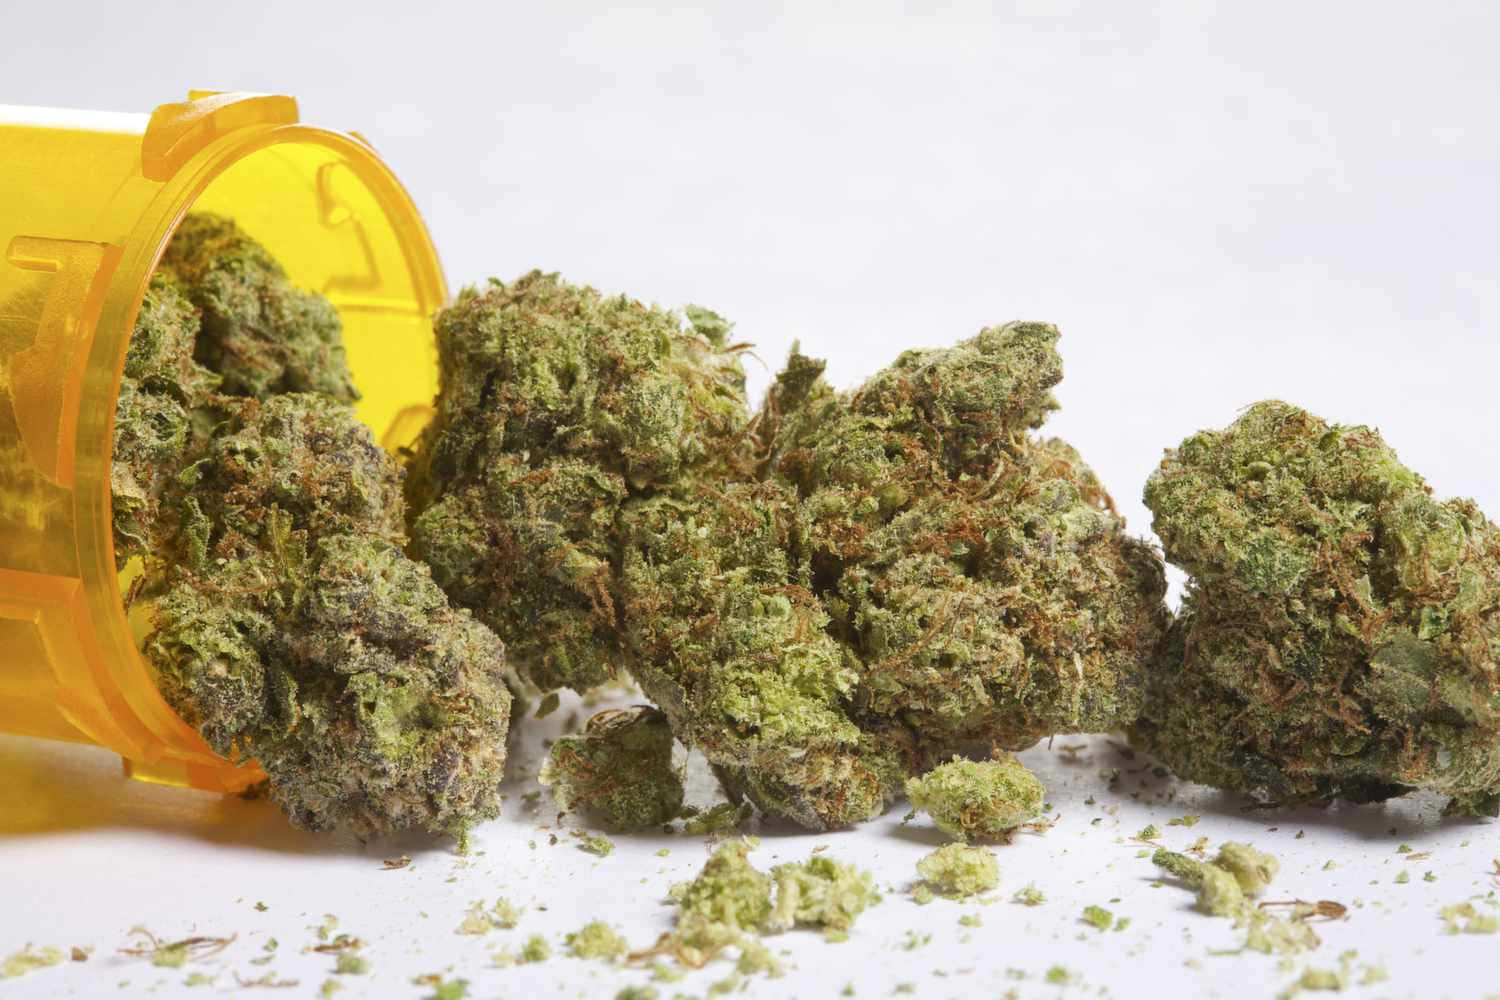 Caption: Vibrant Marijuana Plant in Full Bloom